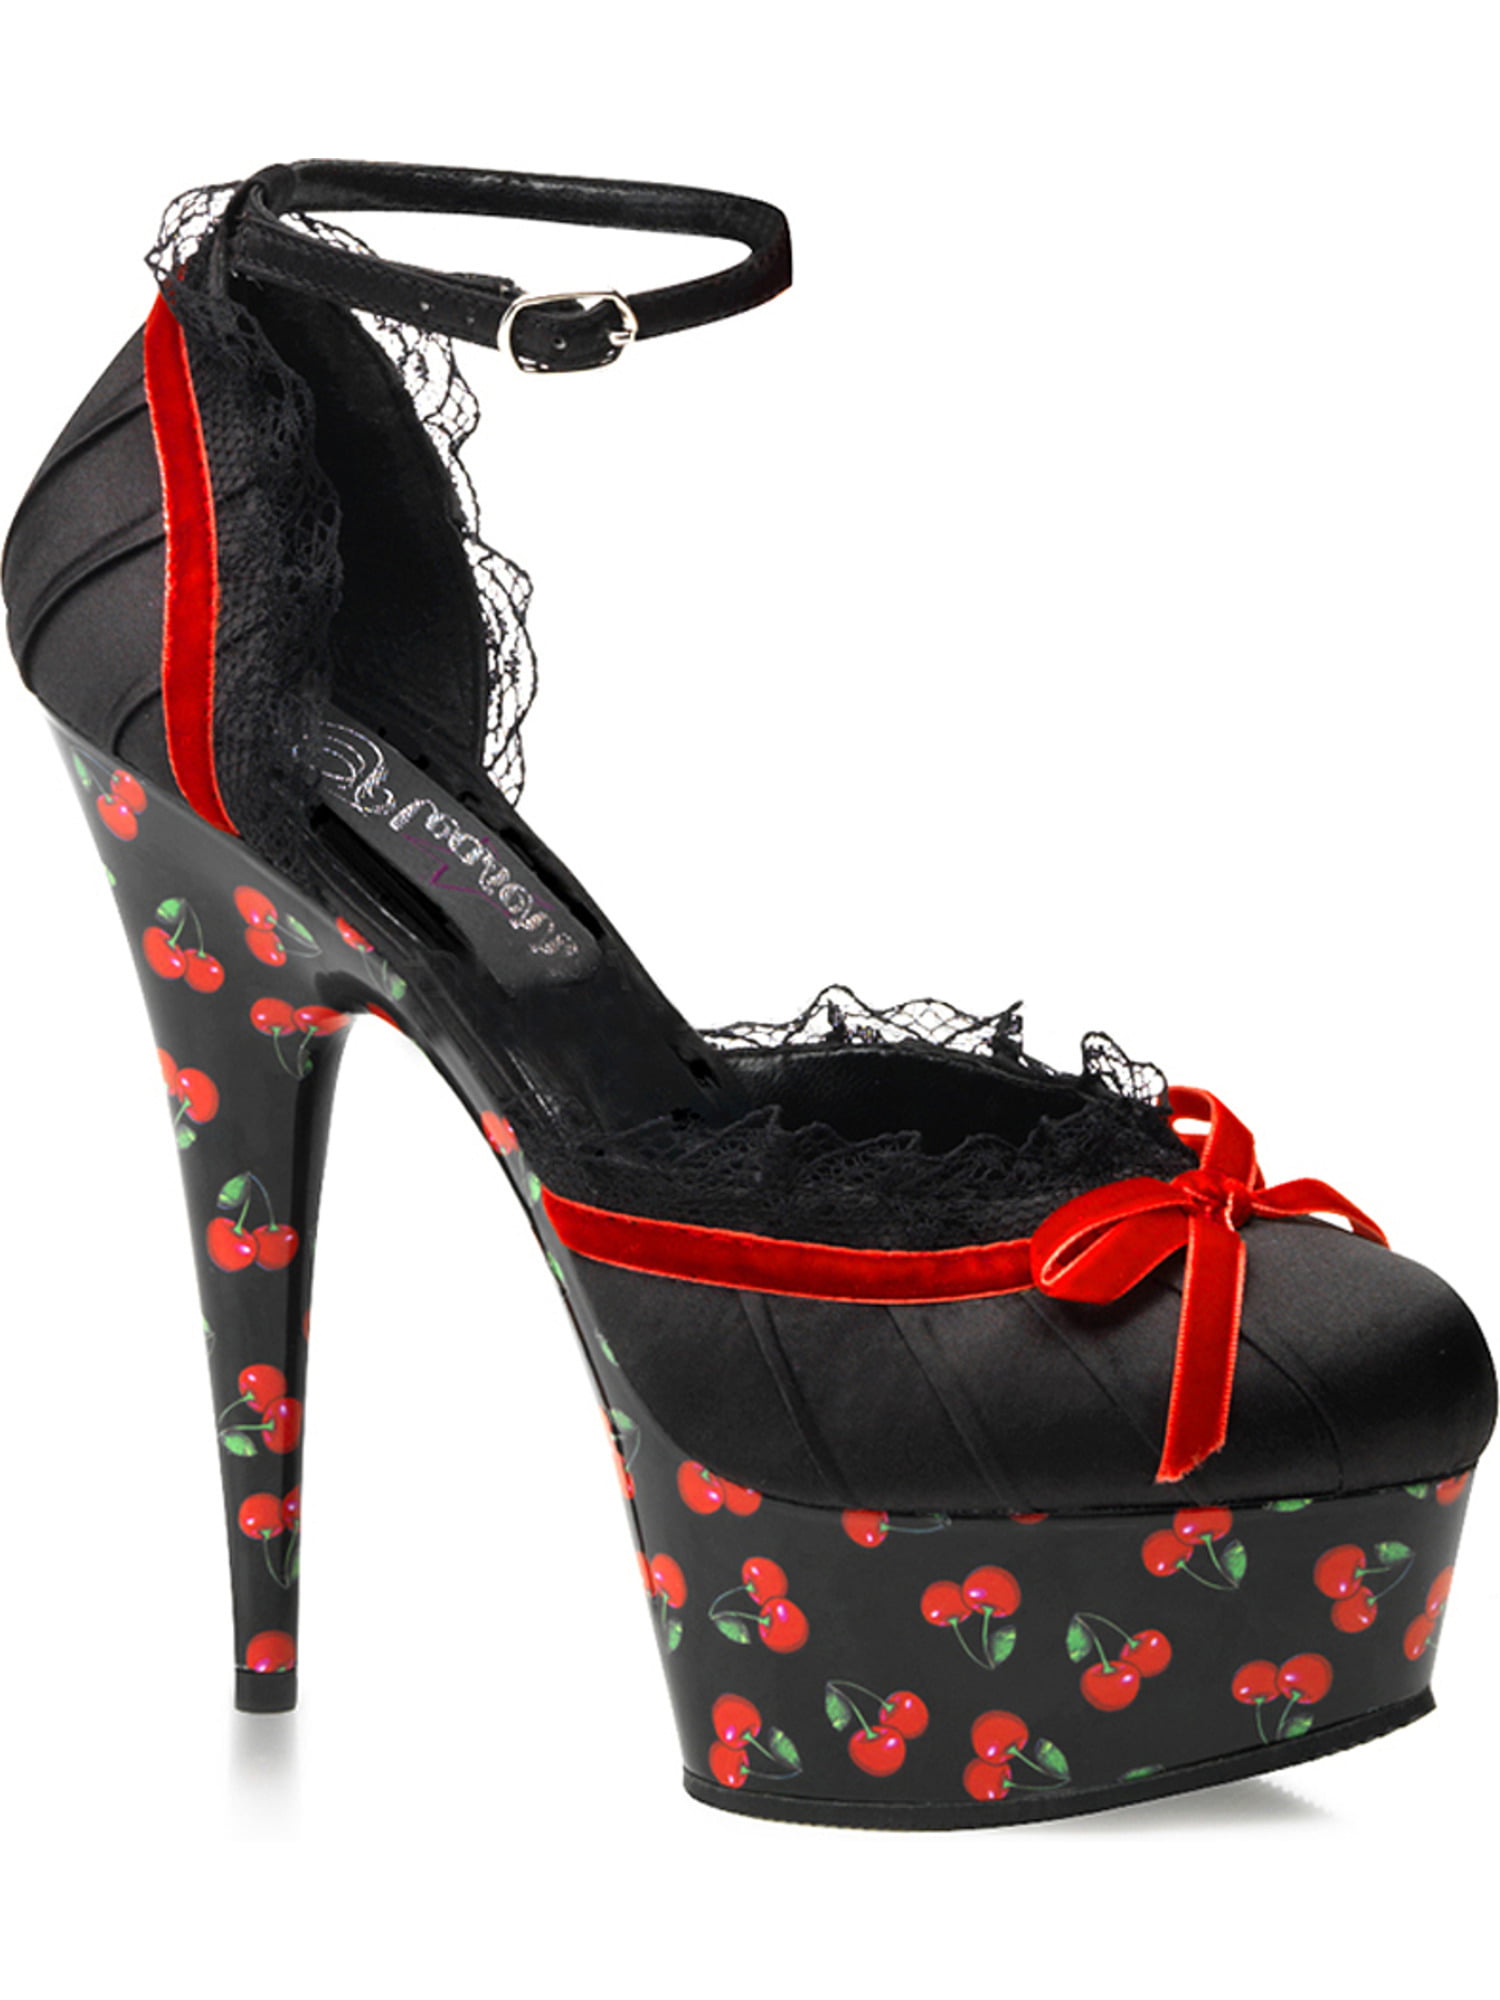 Summitfashions 6 Inch High Heel Sexy Platform Shoes Rockabilly Cherry 